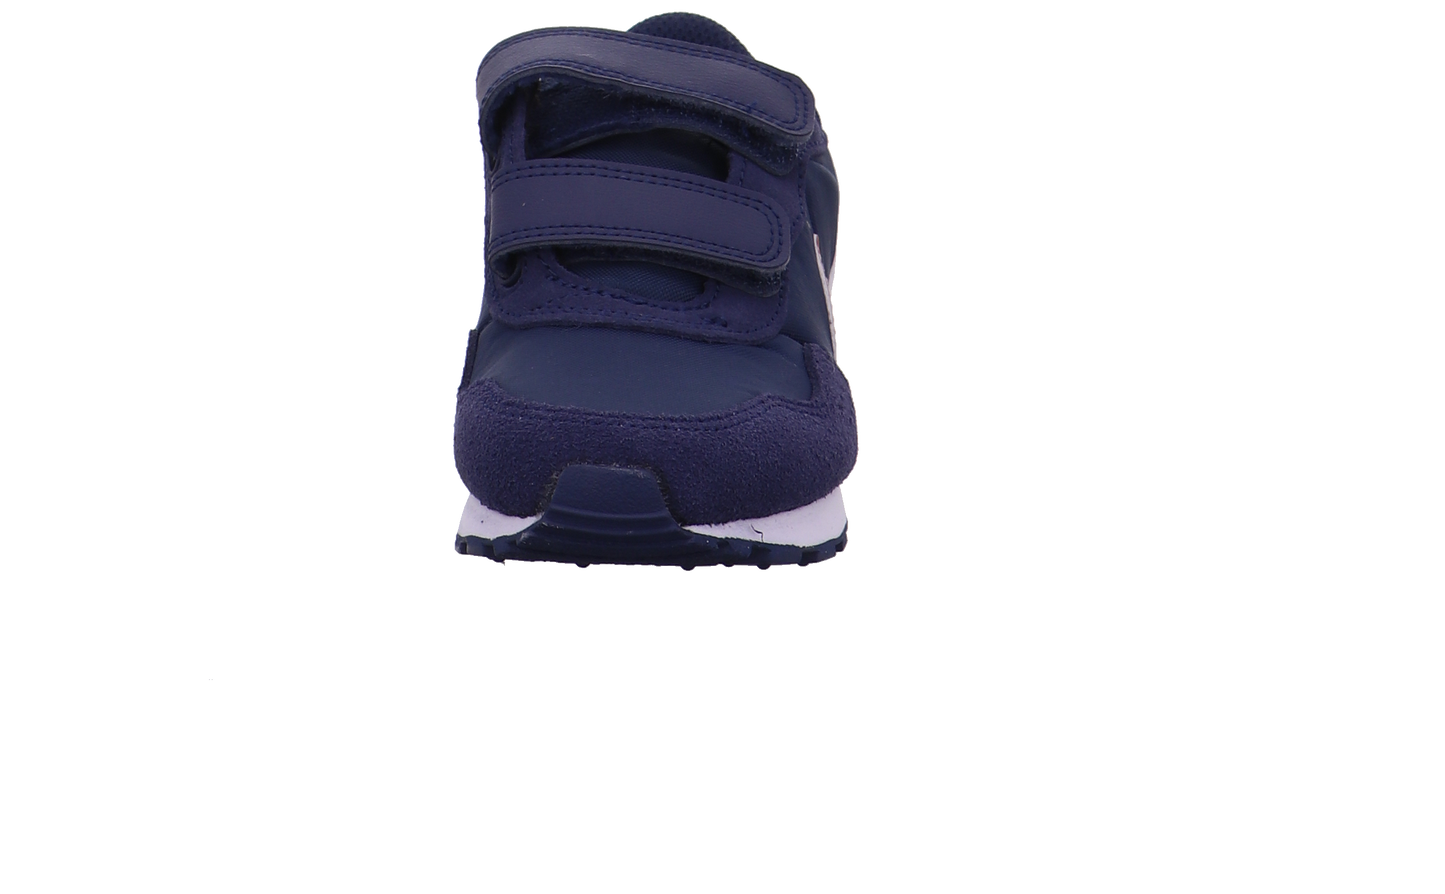 Nike Krabbel- und Lauflernschuhe blau kombi Bild7